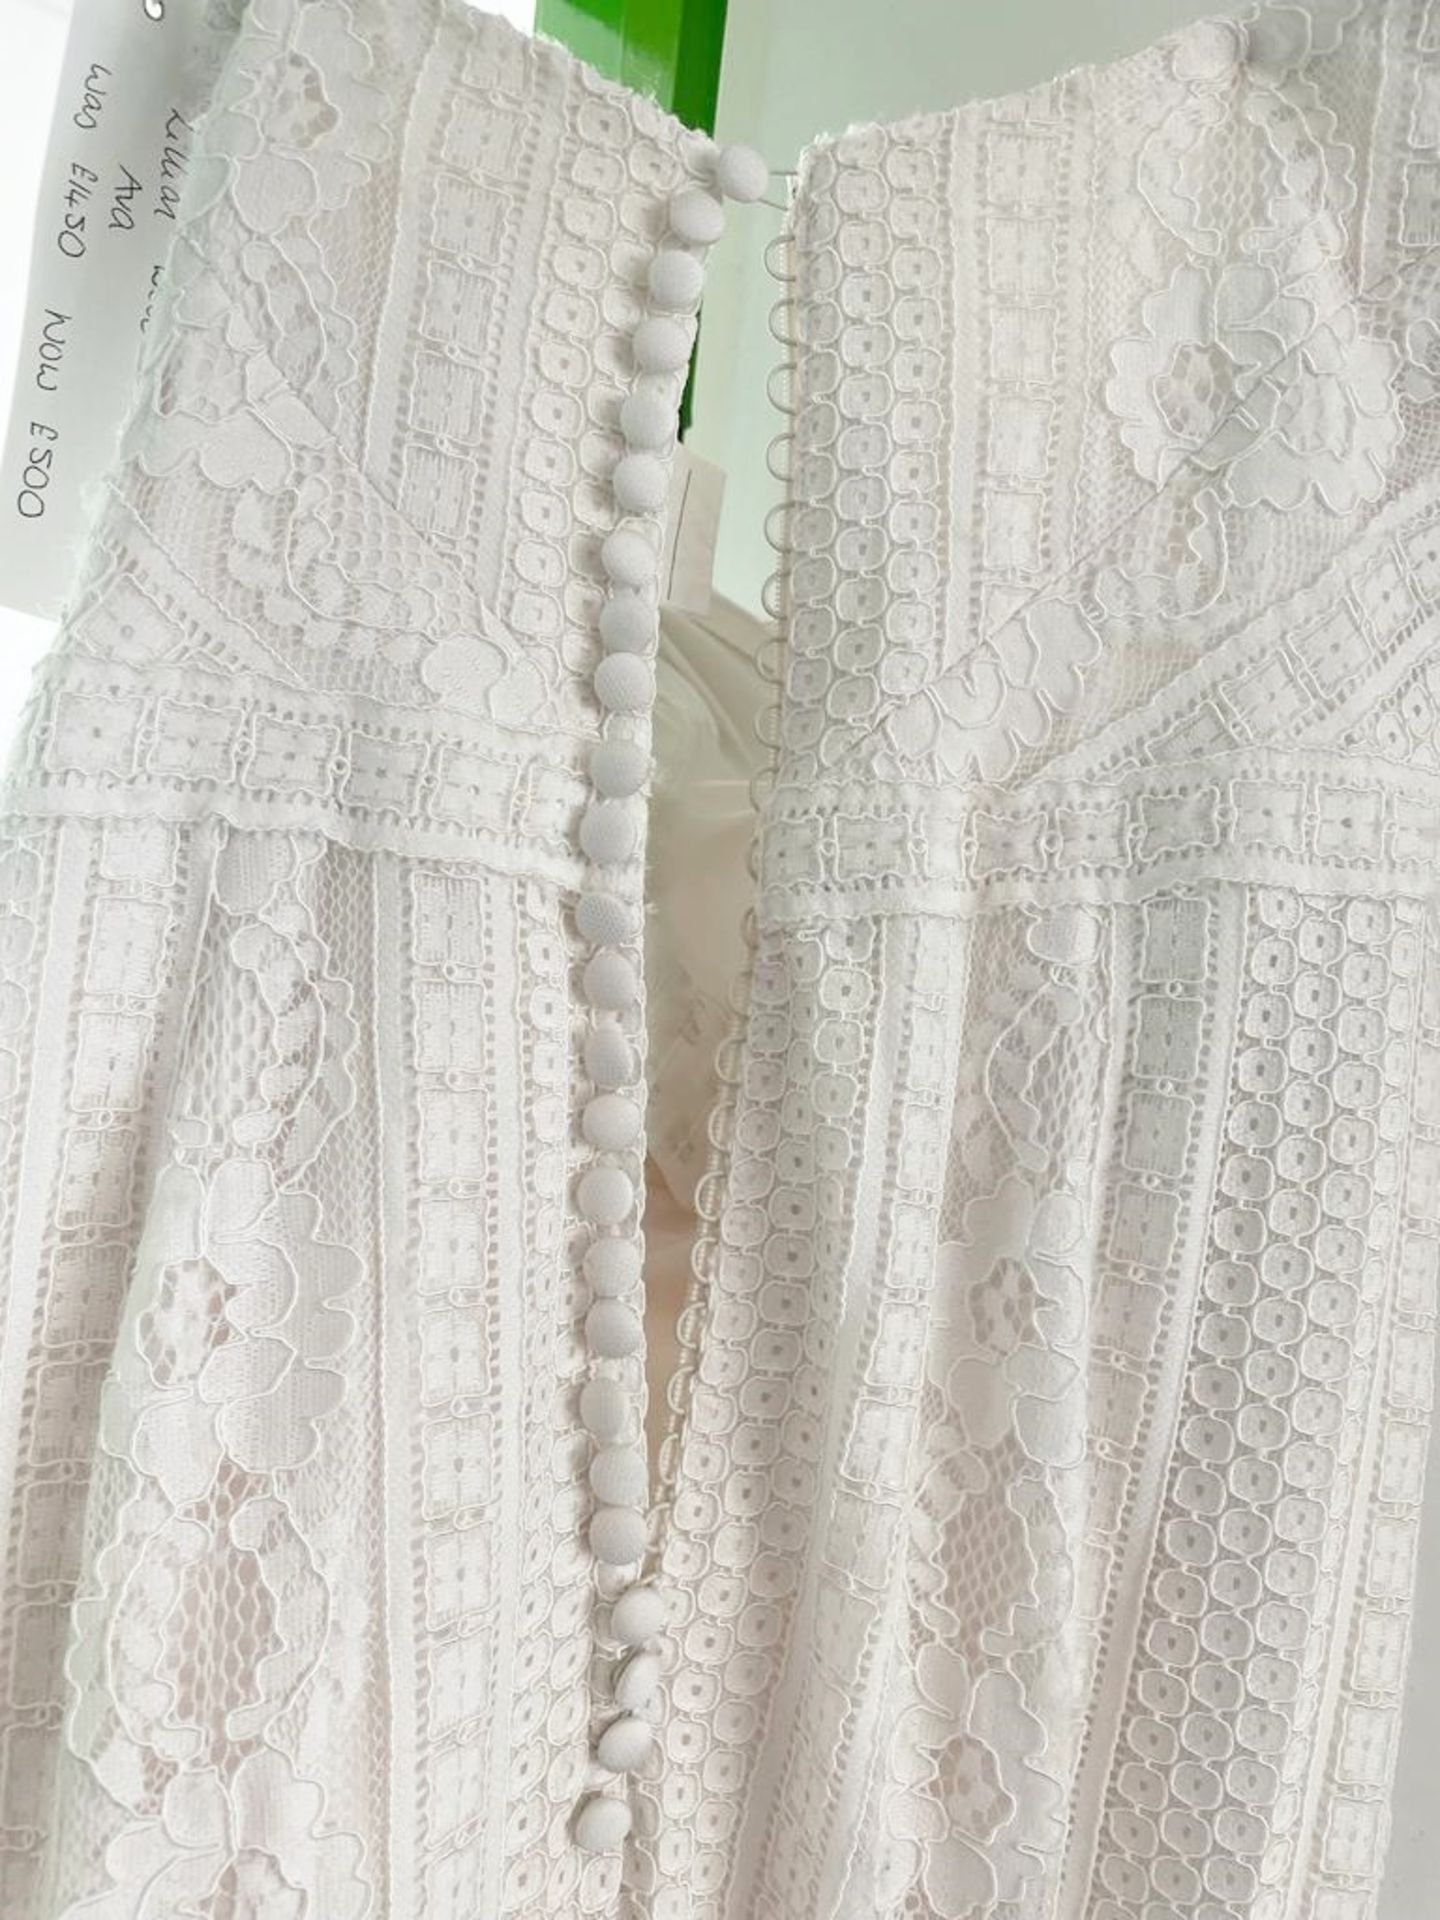 1 x LILLIAN WEST 'Ava' Designer Wedding Dress Bridal Gown - Size: UK 12 - Original RRP £1,450 - Image 11 of 16